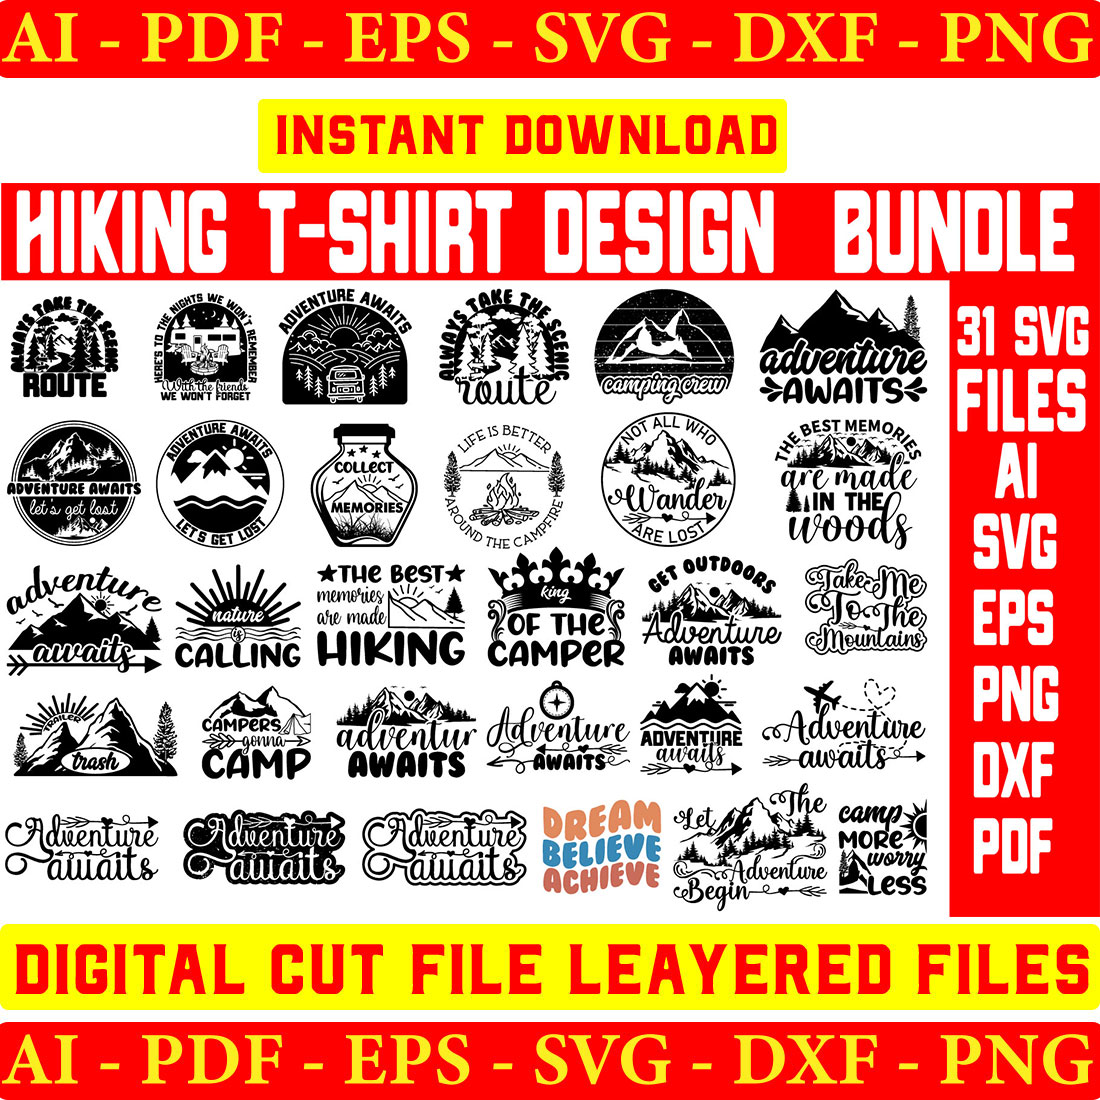 Hiking T-shirt Design Bundle cover image.